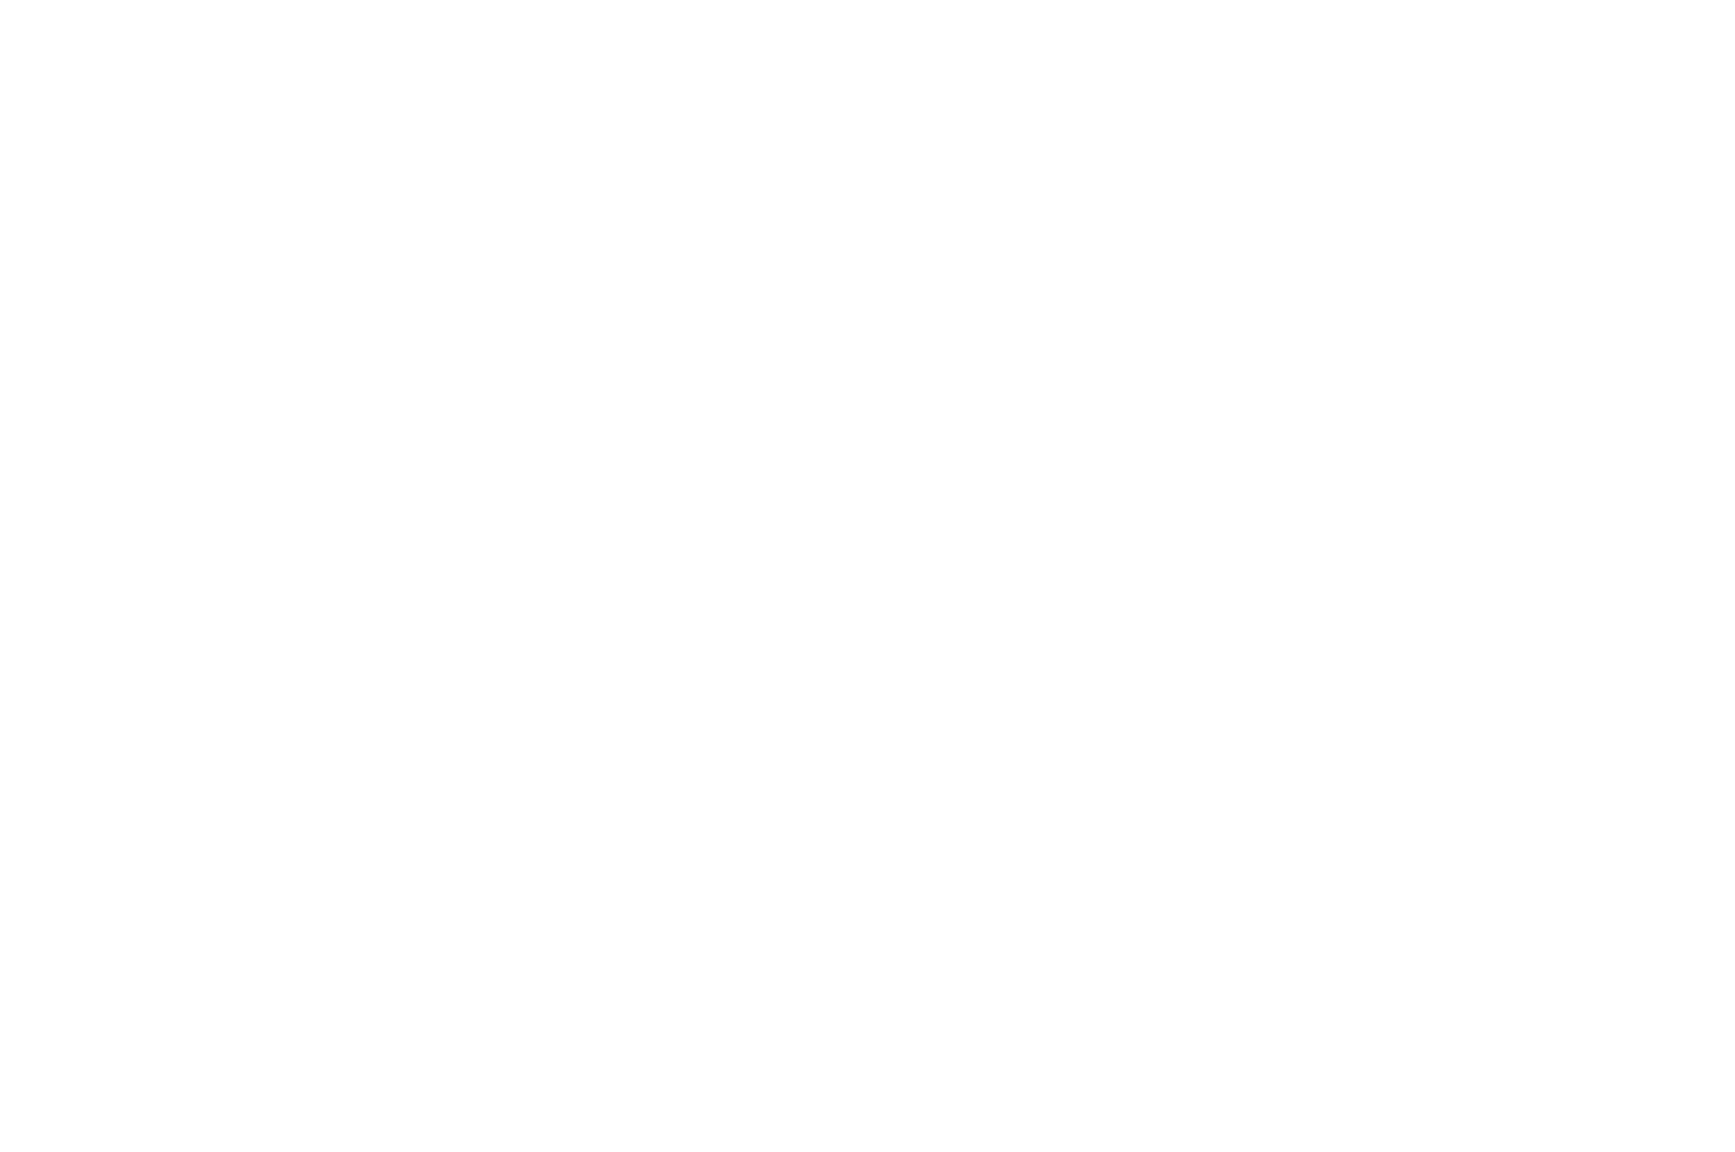 WINNER - New York Cinematography Award - 2021